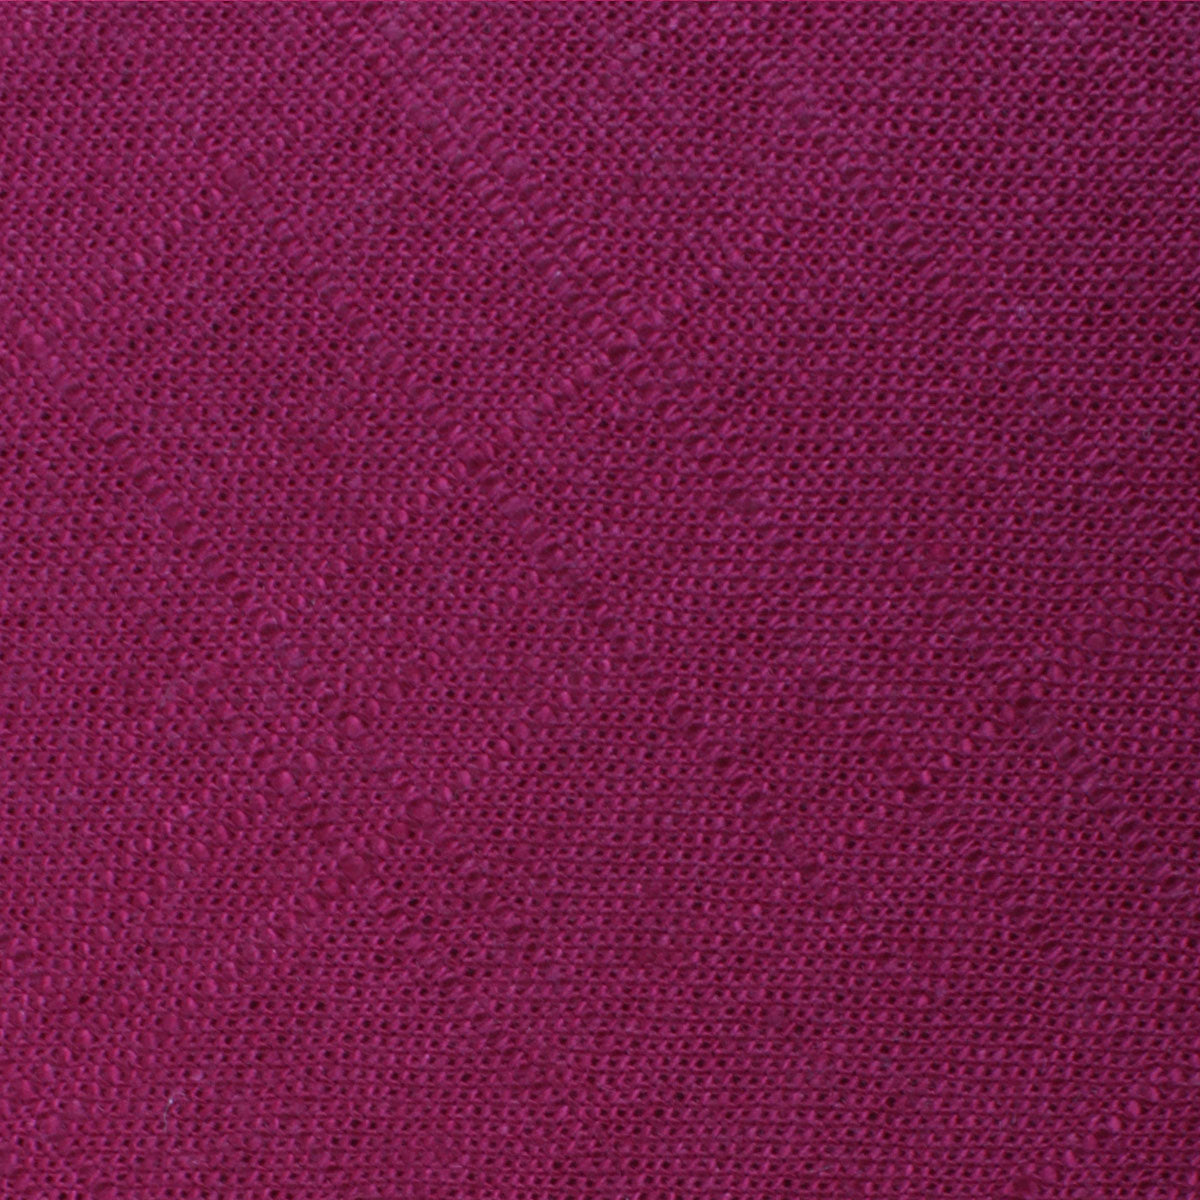 Sangria Slub Linen Pocket Square Fabric